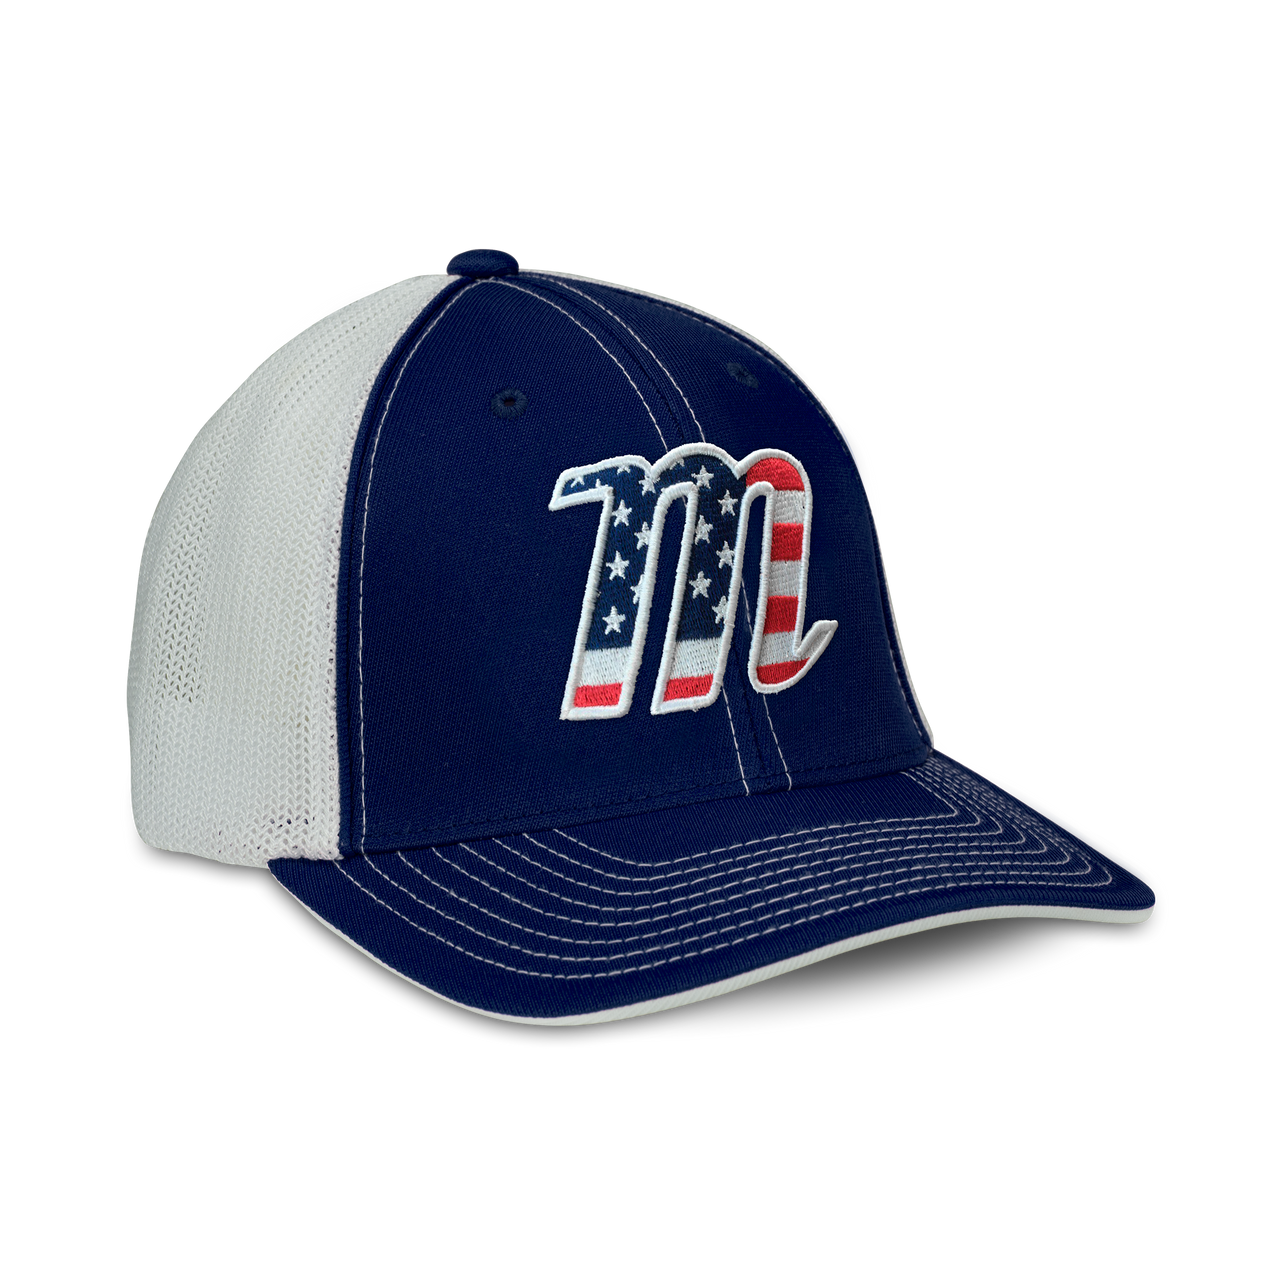 Marucci USA Trucker Snapback Hat Navy Blue/White Adjustable